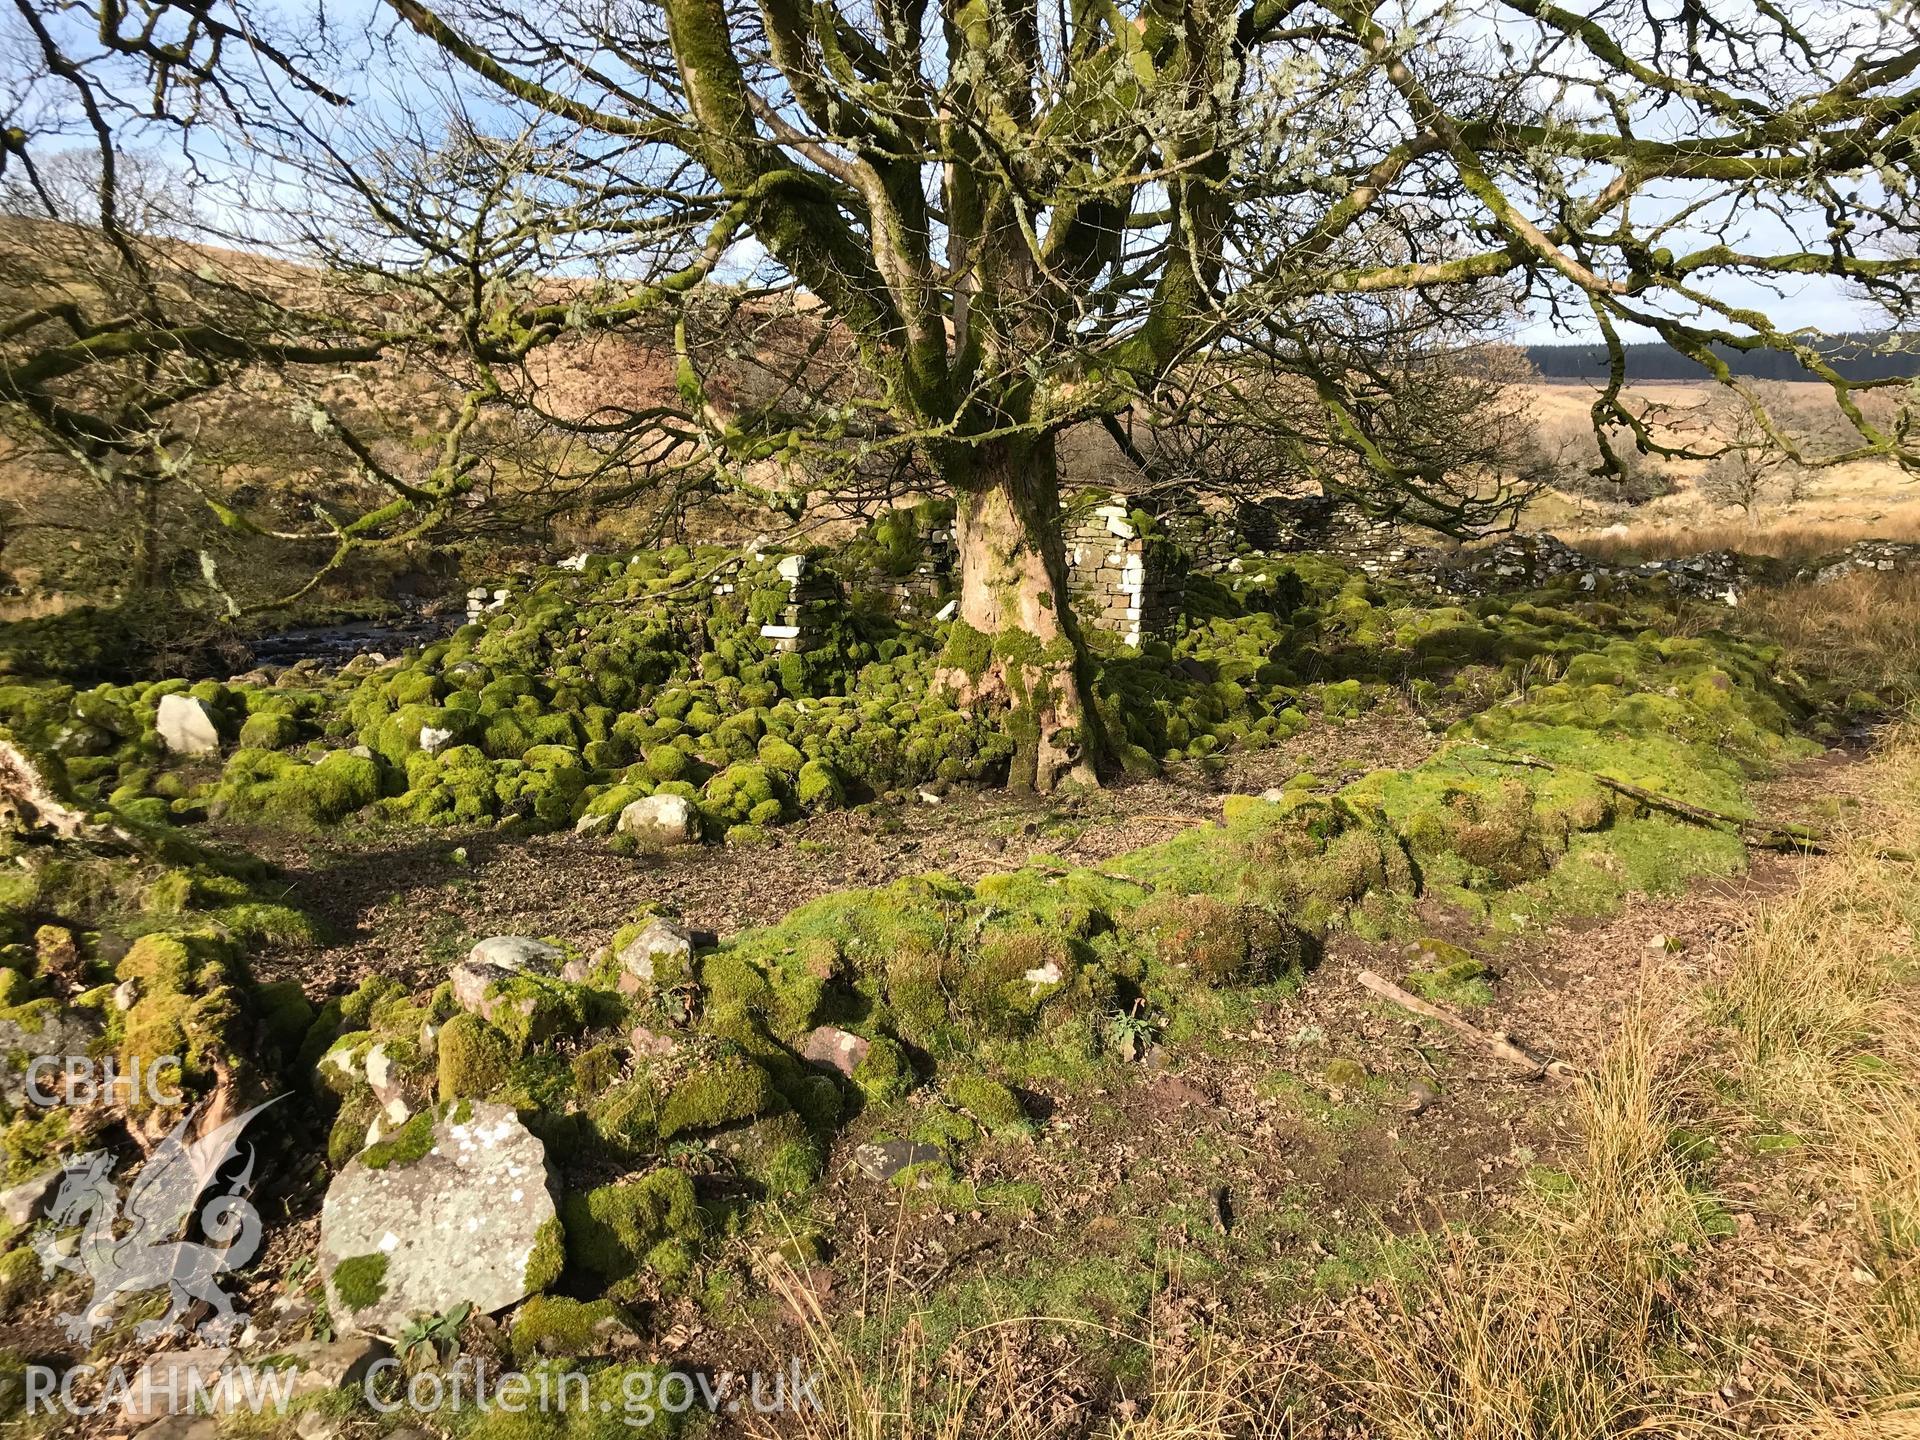 Colour photograph of Blaen-nedd Fechan abandoned farmstead, Ystradfellte, in the Brecon Beacons, taken by Paul R. Davis on 22nd February 2019.